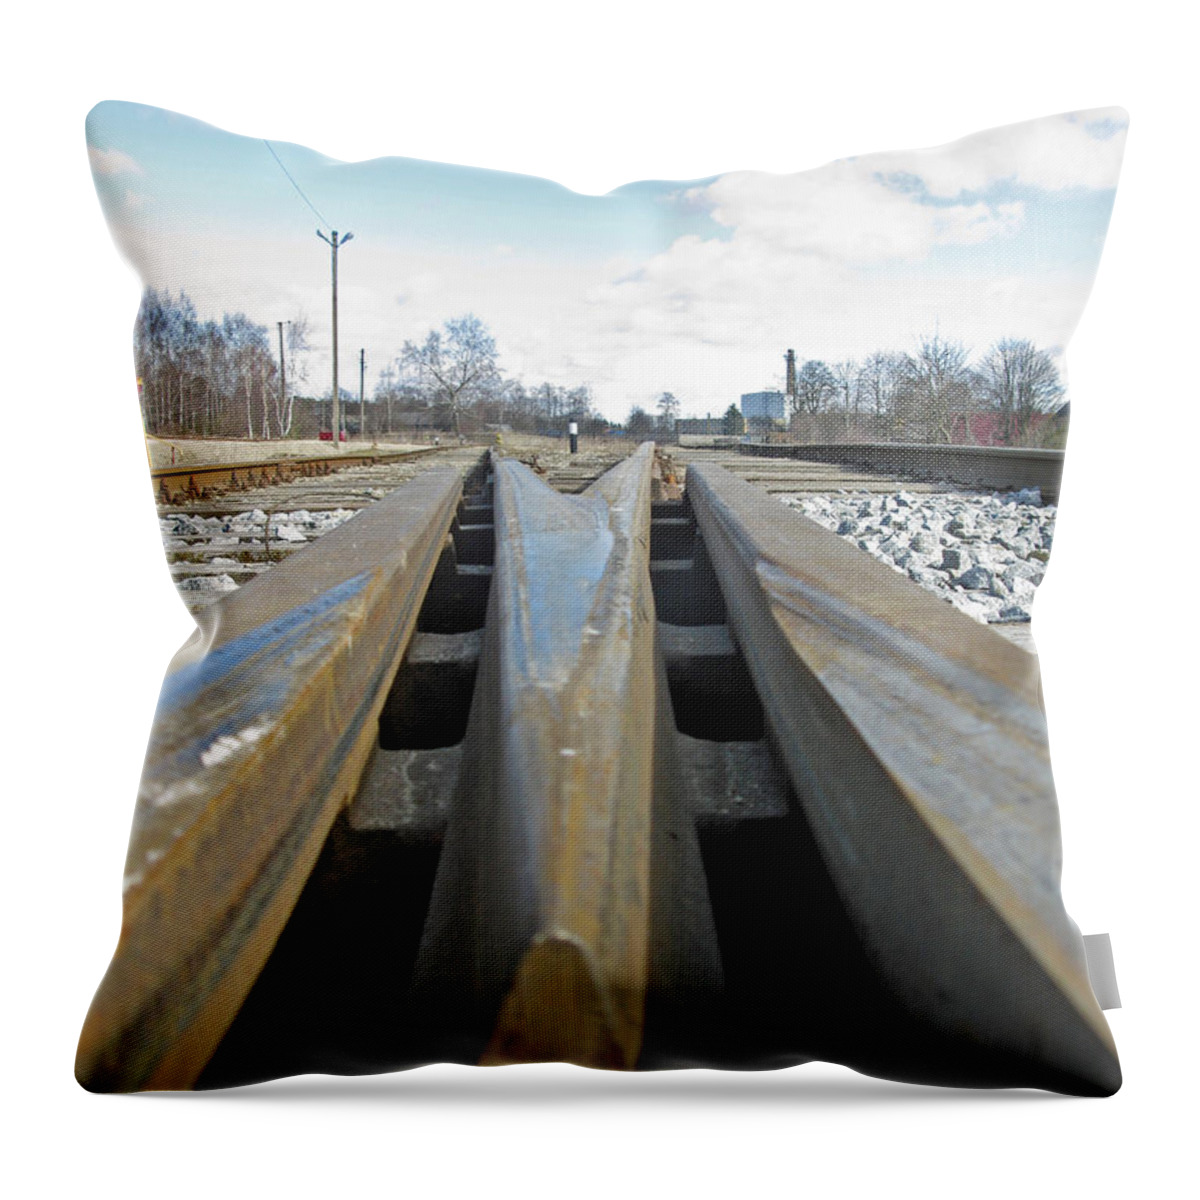 Railroad Throw Pillow featuring the photograph Railroad Series 04 by Ausra Huntington nee Paulauskaite